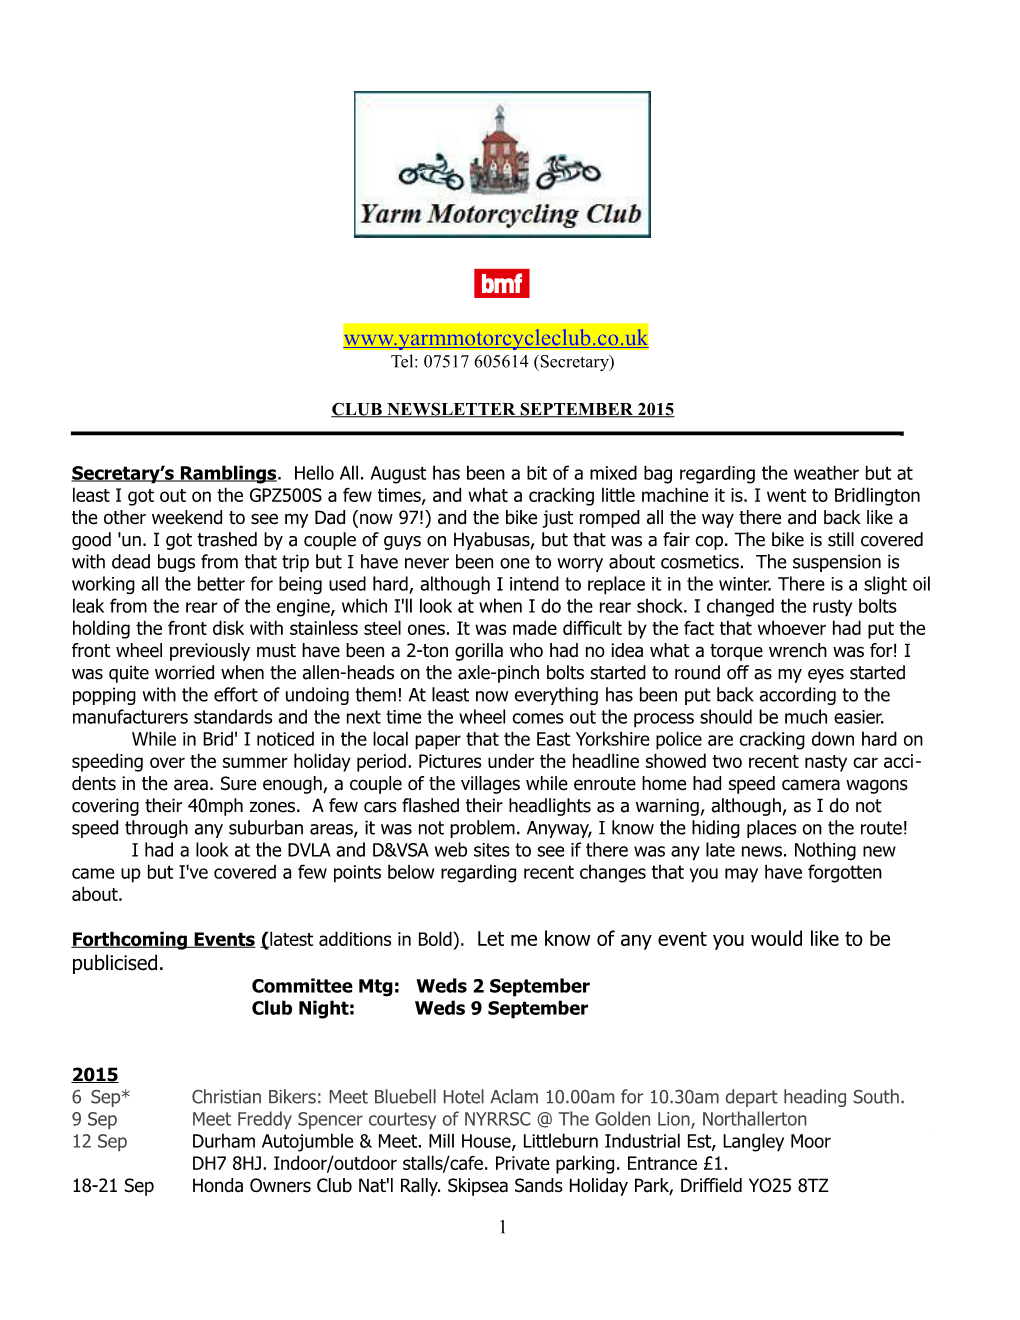 Yarm Motorcycling Club Newsletter September 2007 s4